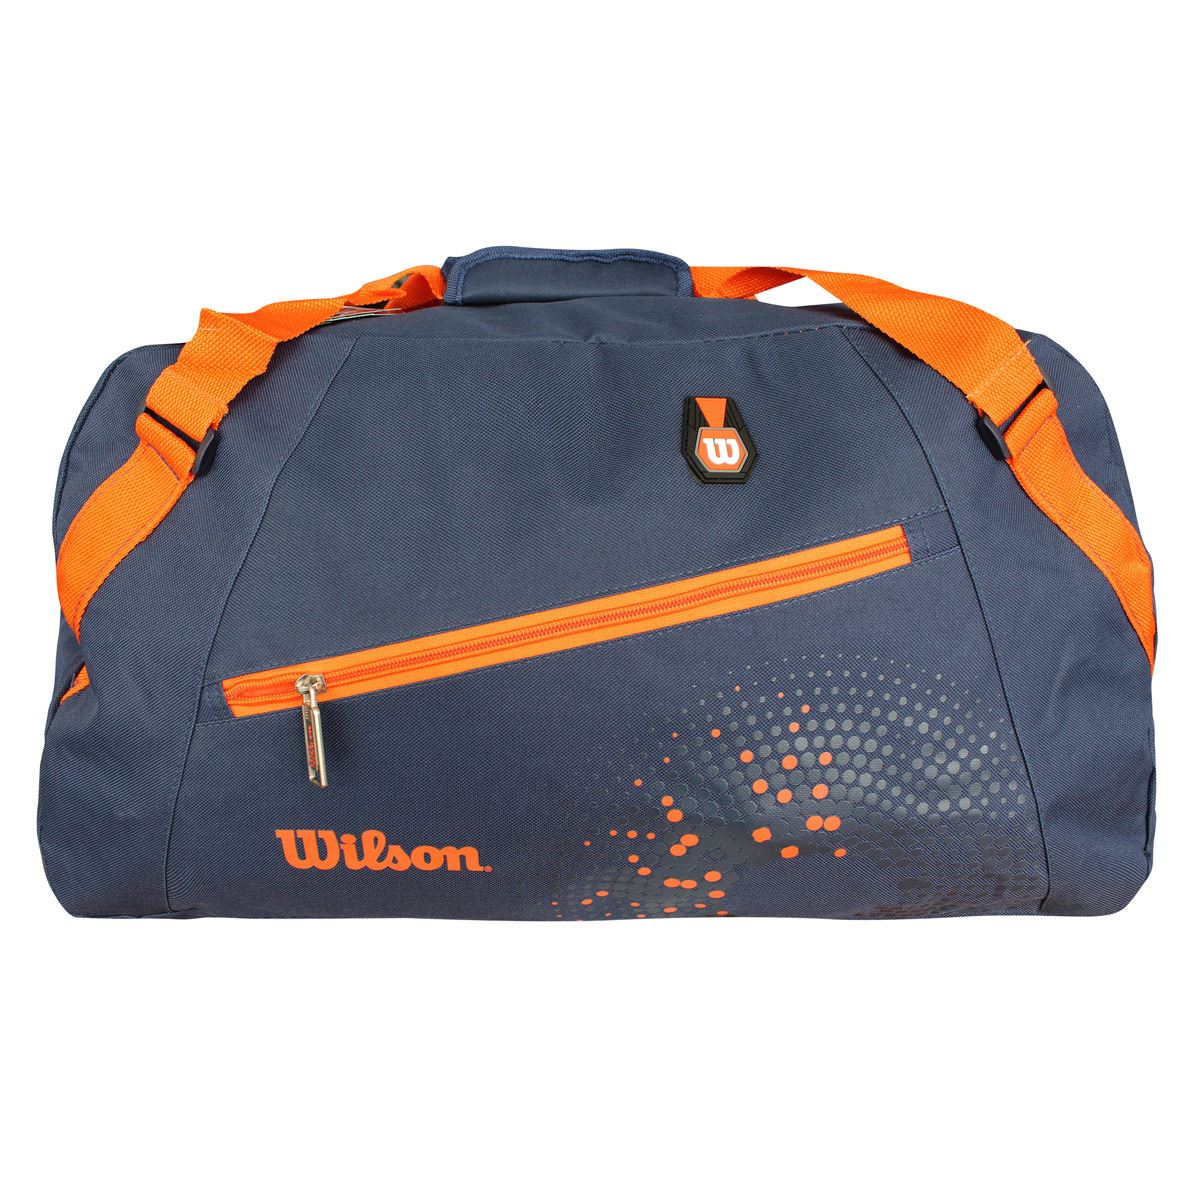 Maleta Deportiva Wilson Is&#45;15321 Azul Naranja